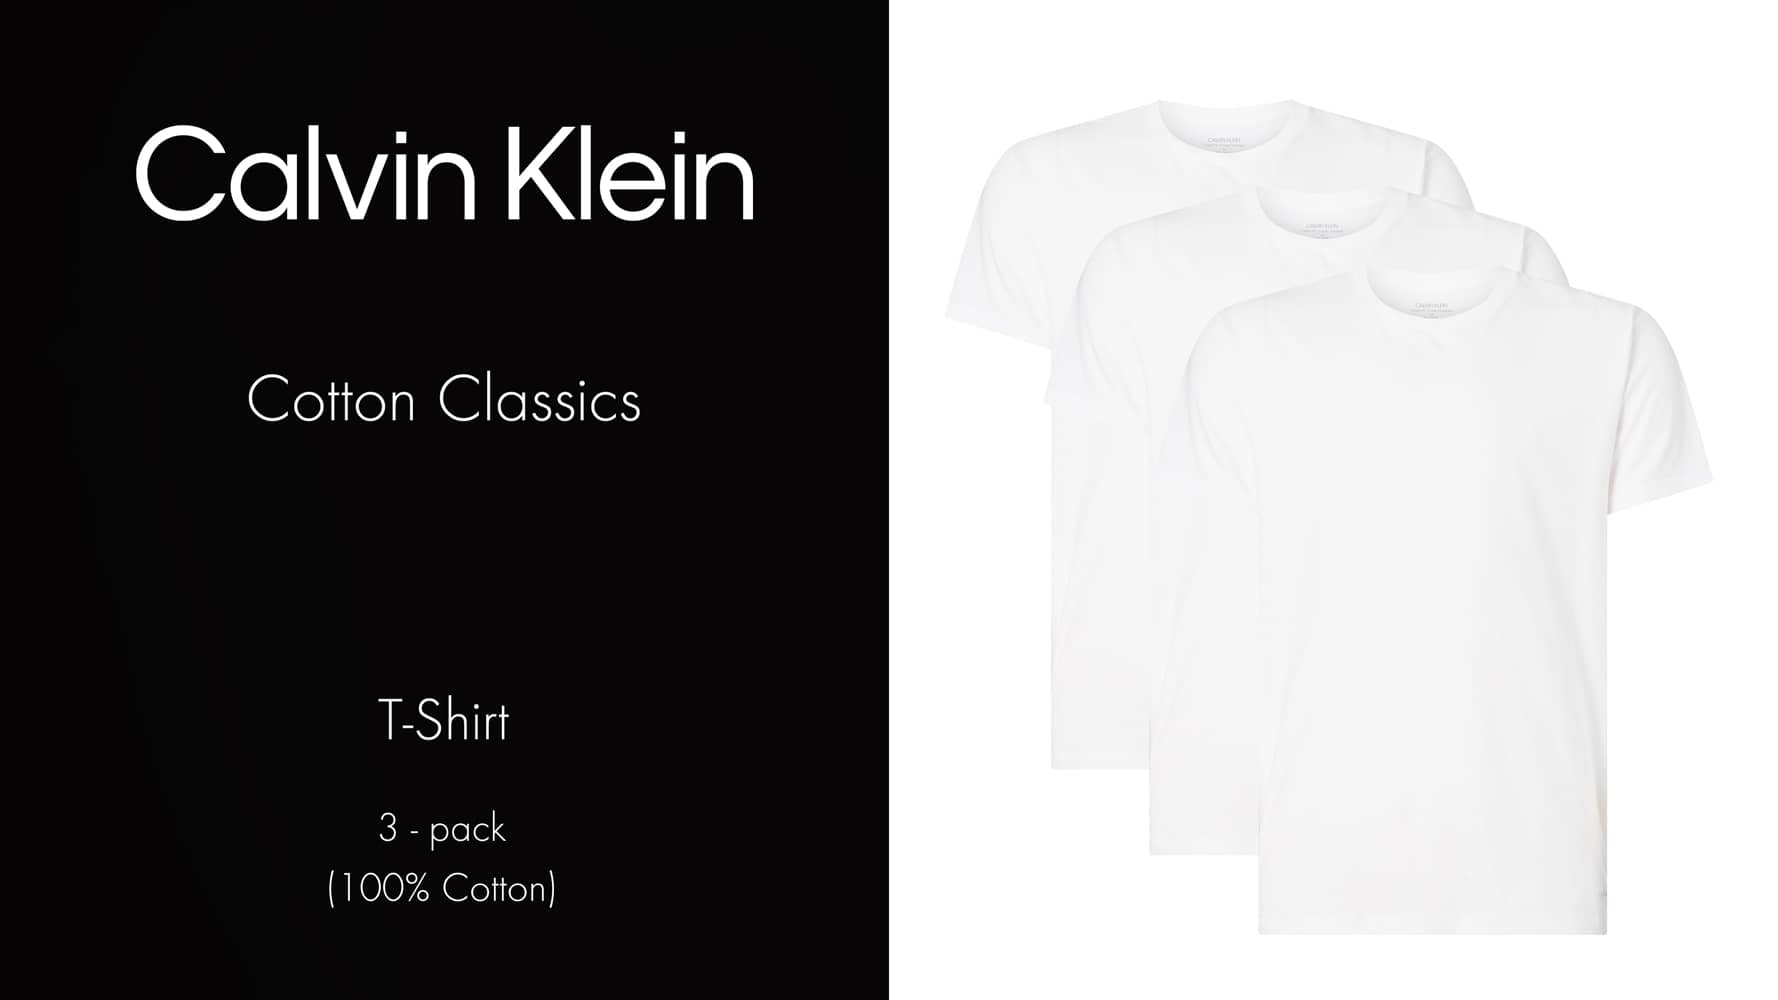 3p T-shirt - Cotton Classics